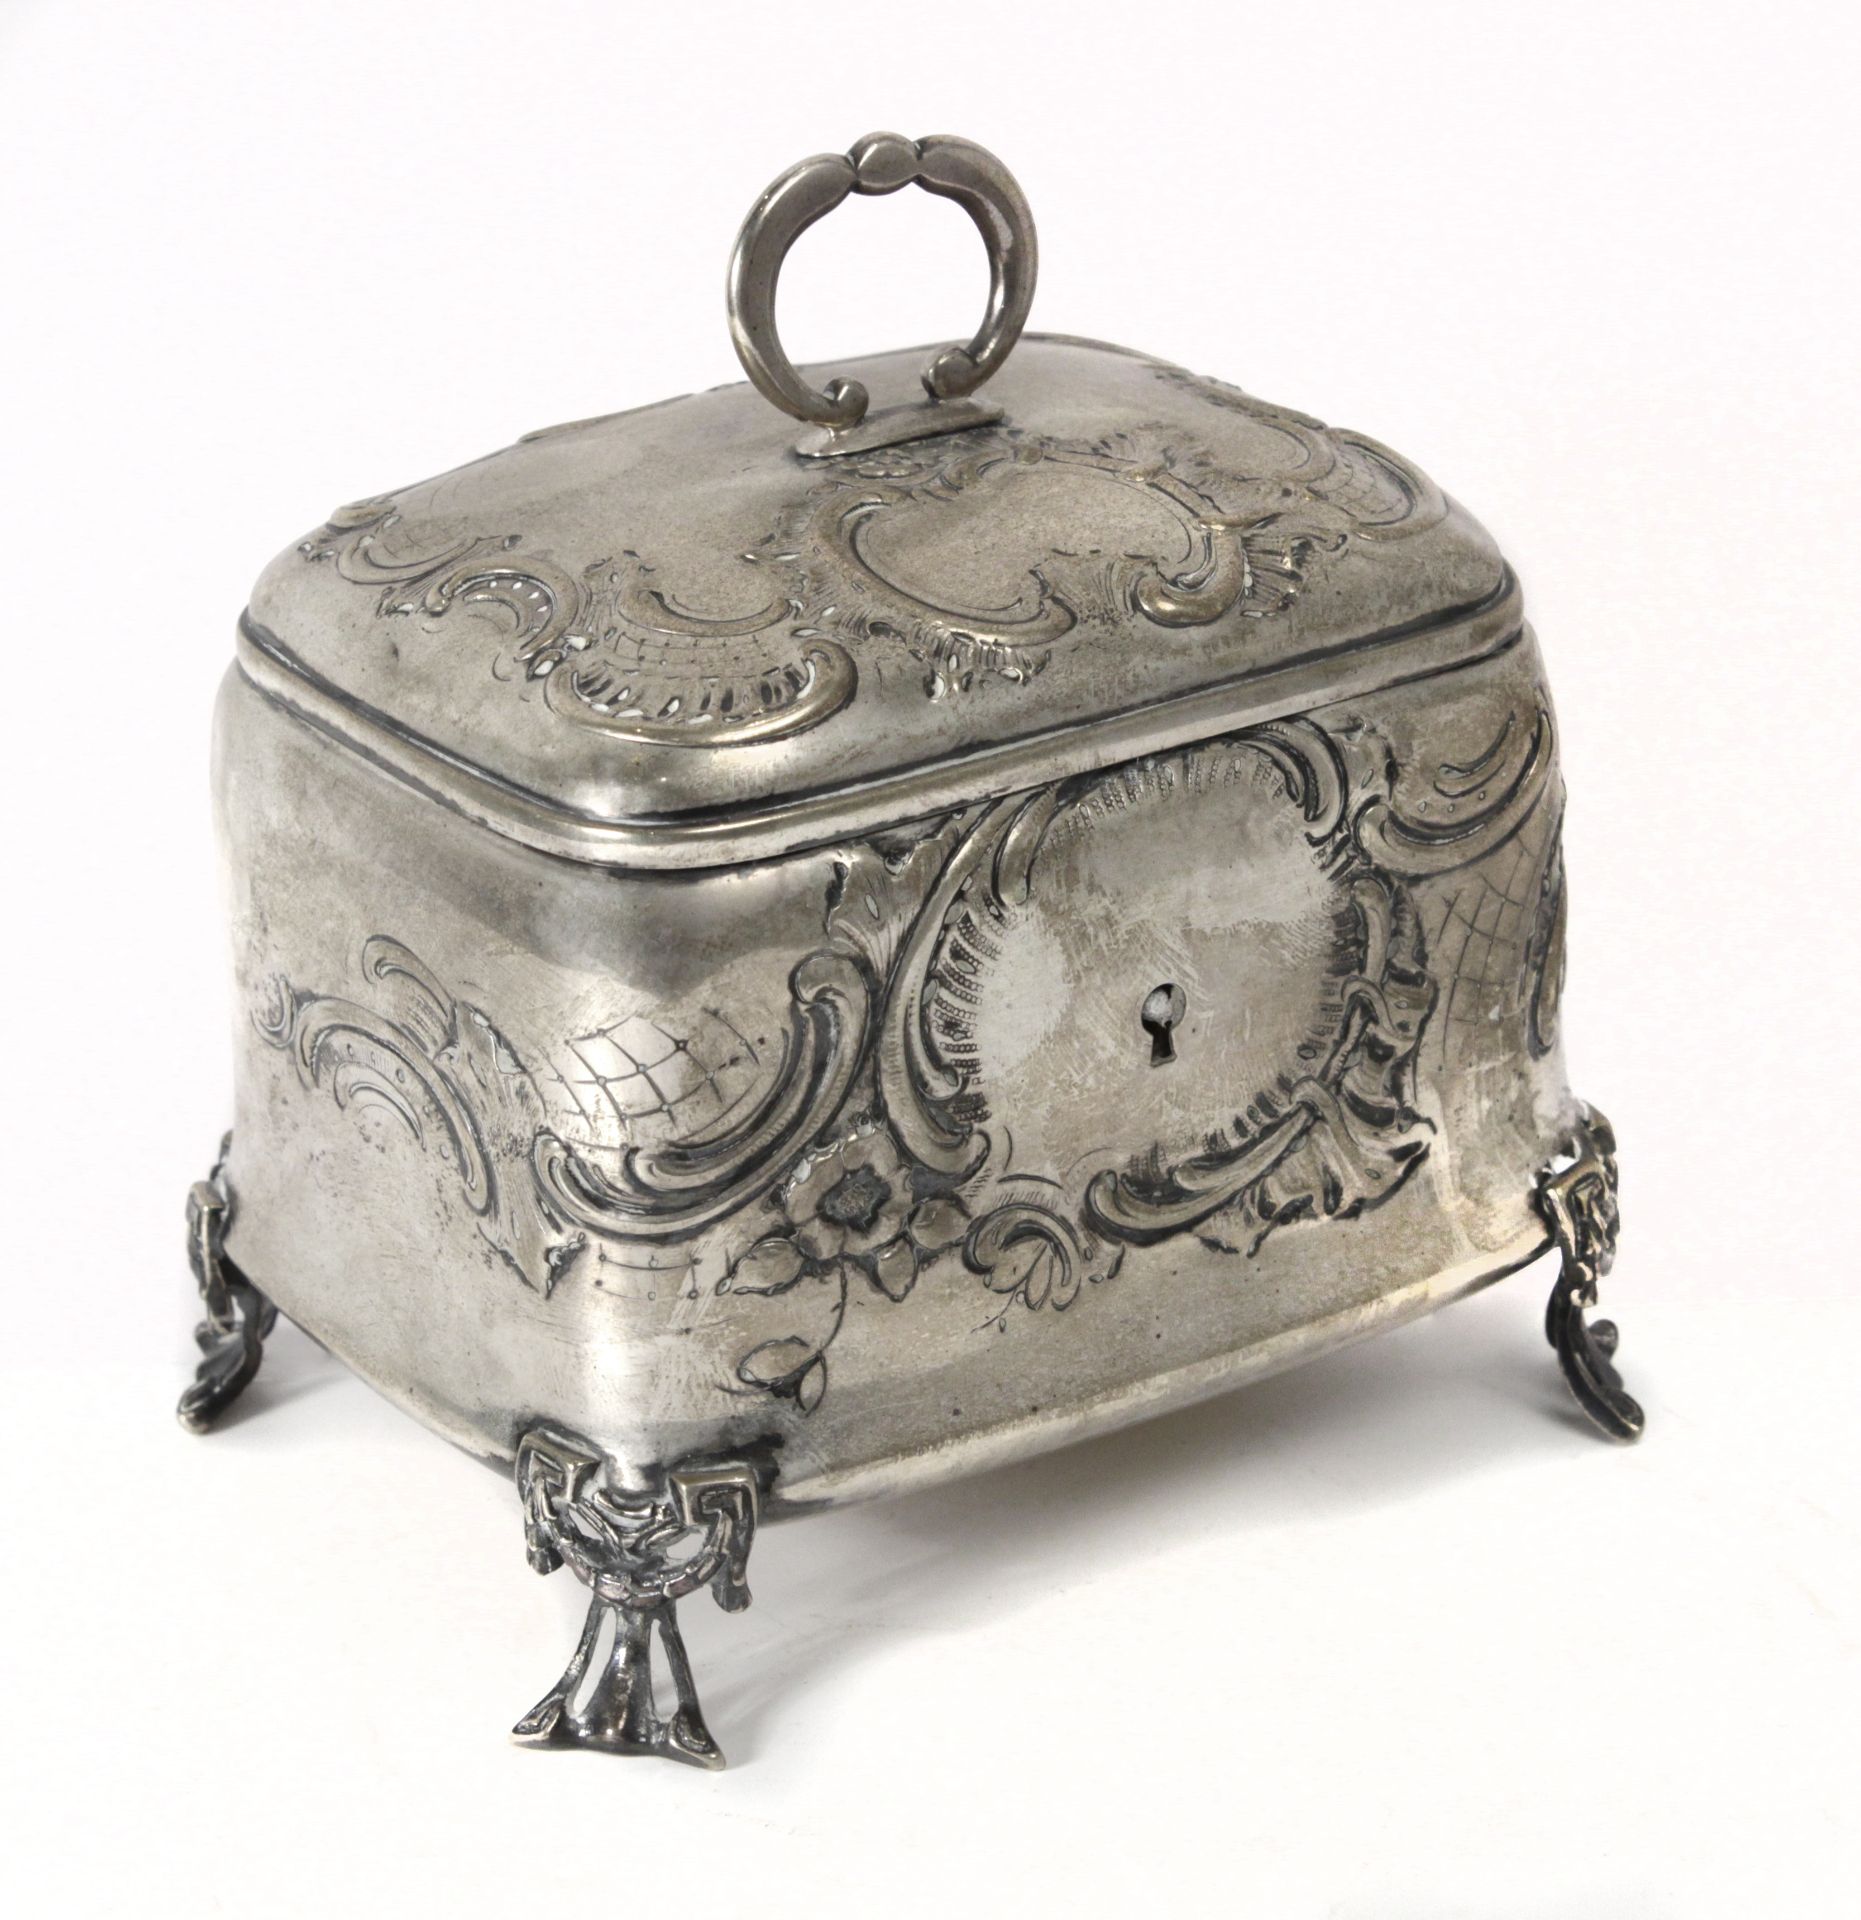 A 19th century Italian silver jewellery box